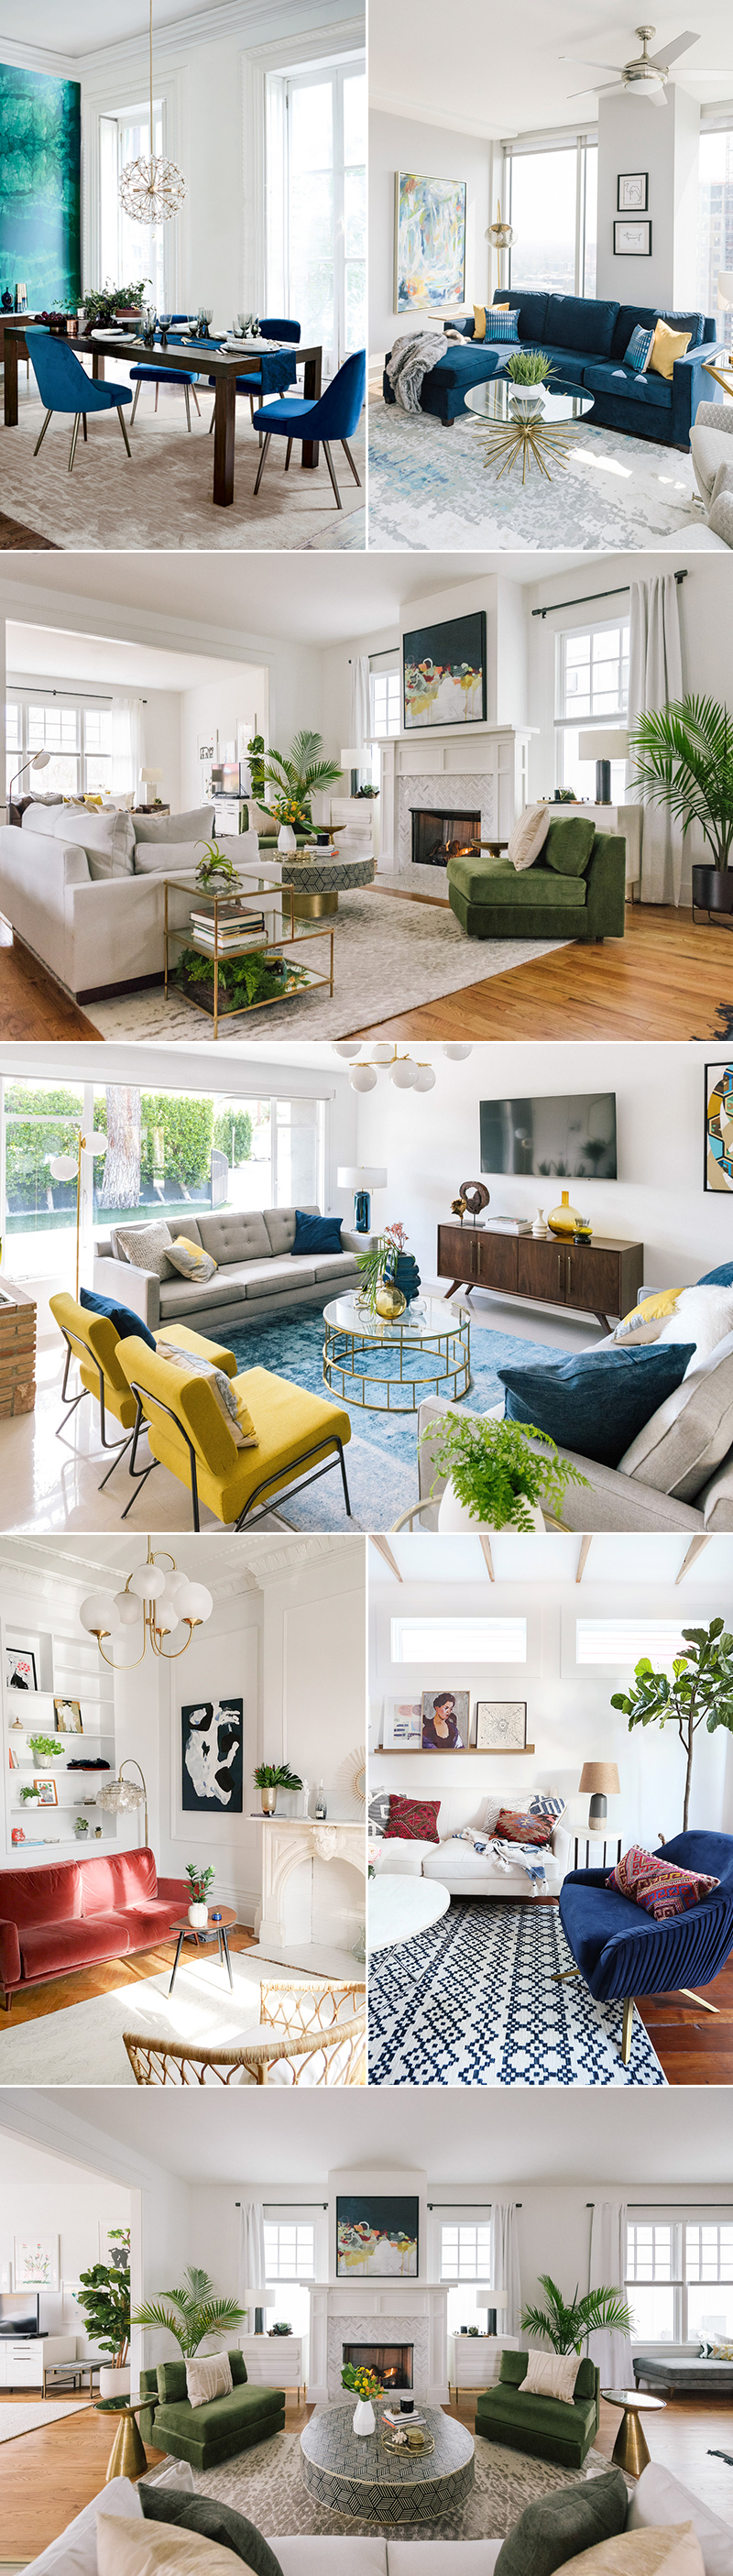 home decor interior design trends 2019 - jewel tones